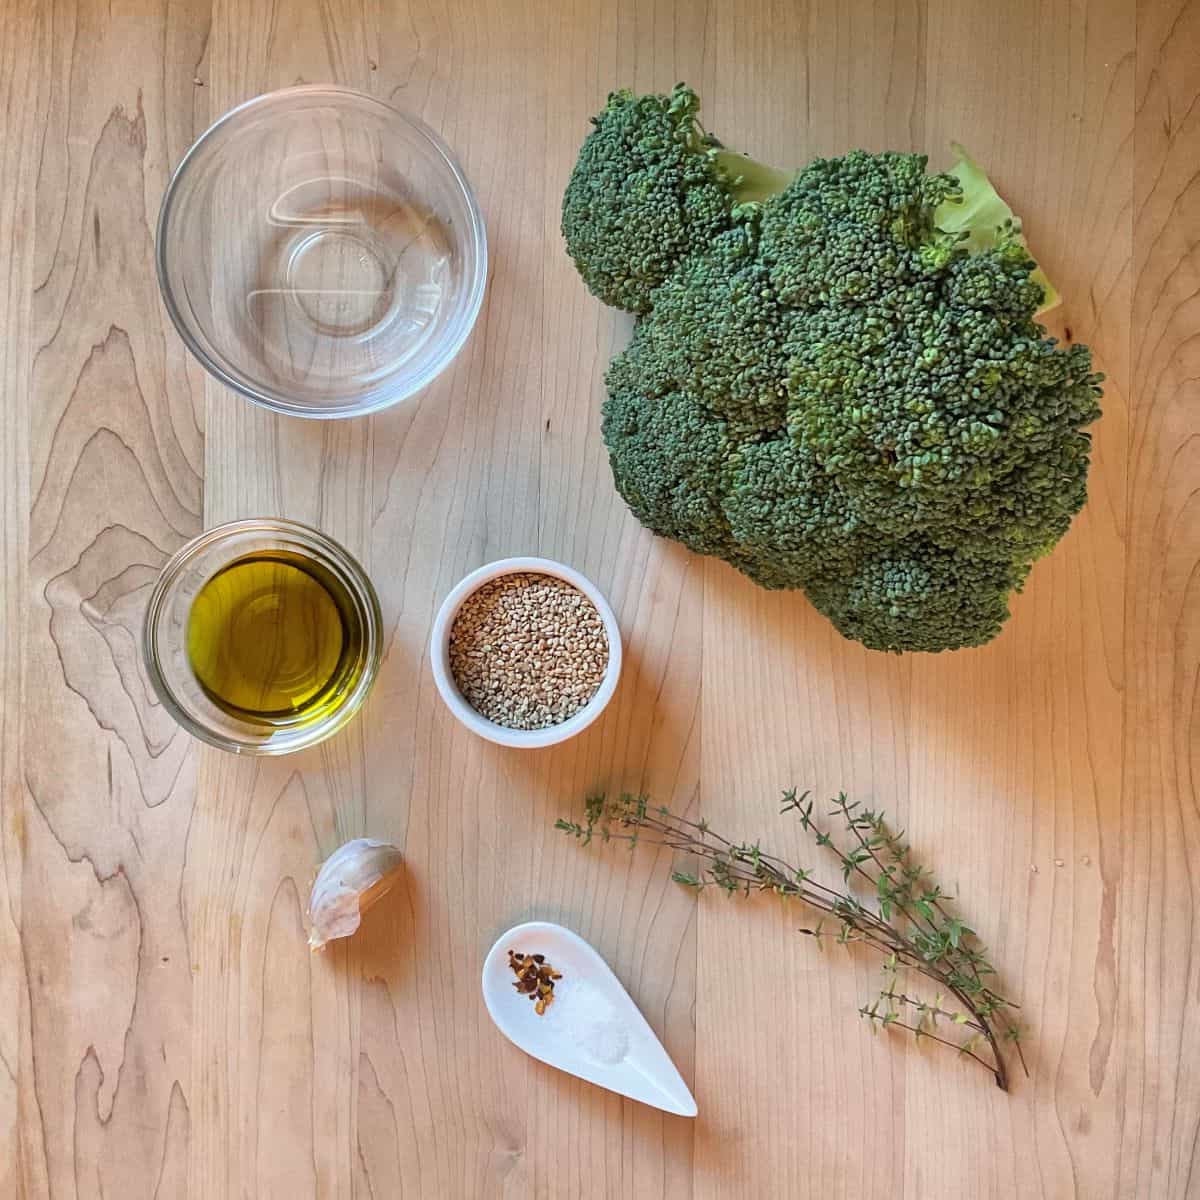 Ingredients to make skillet broccoli.